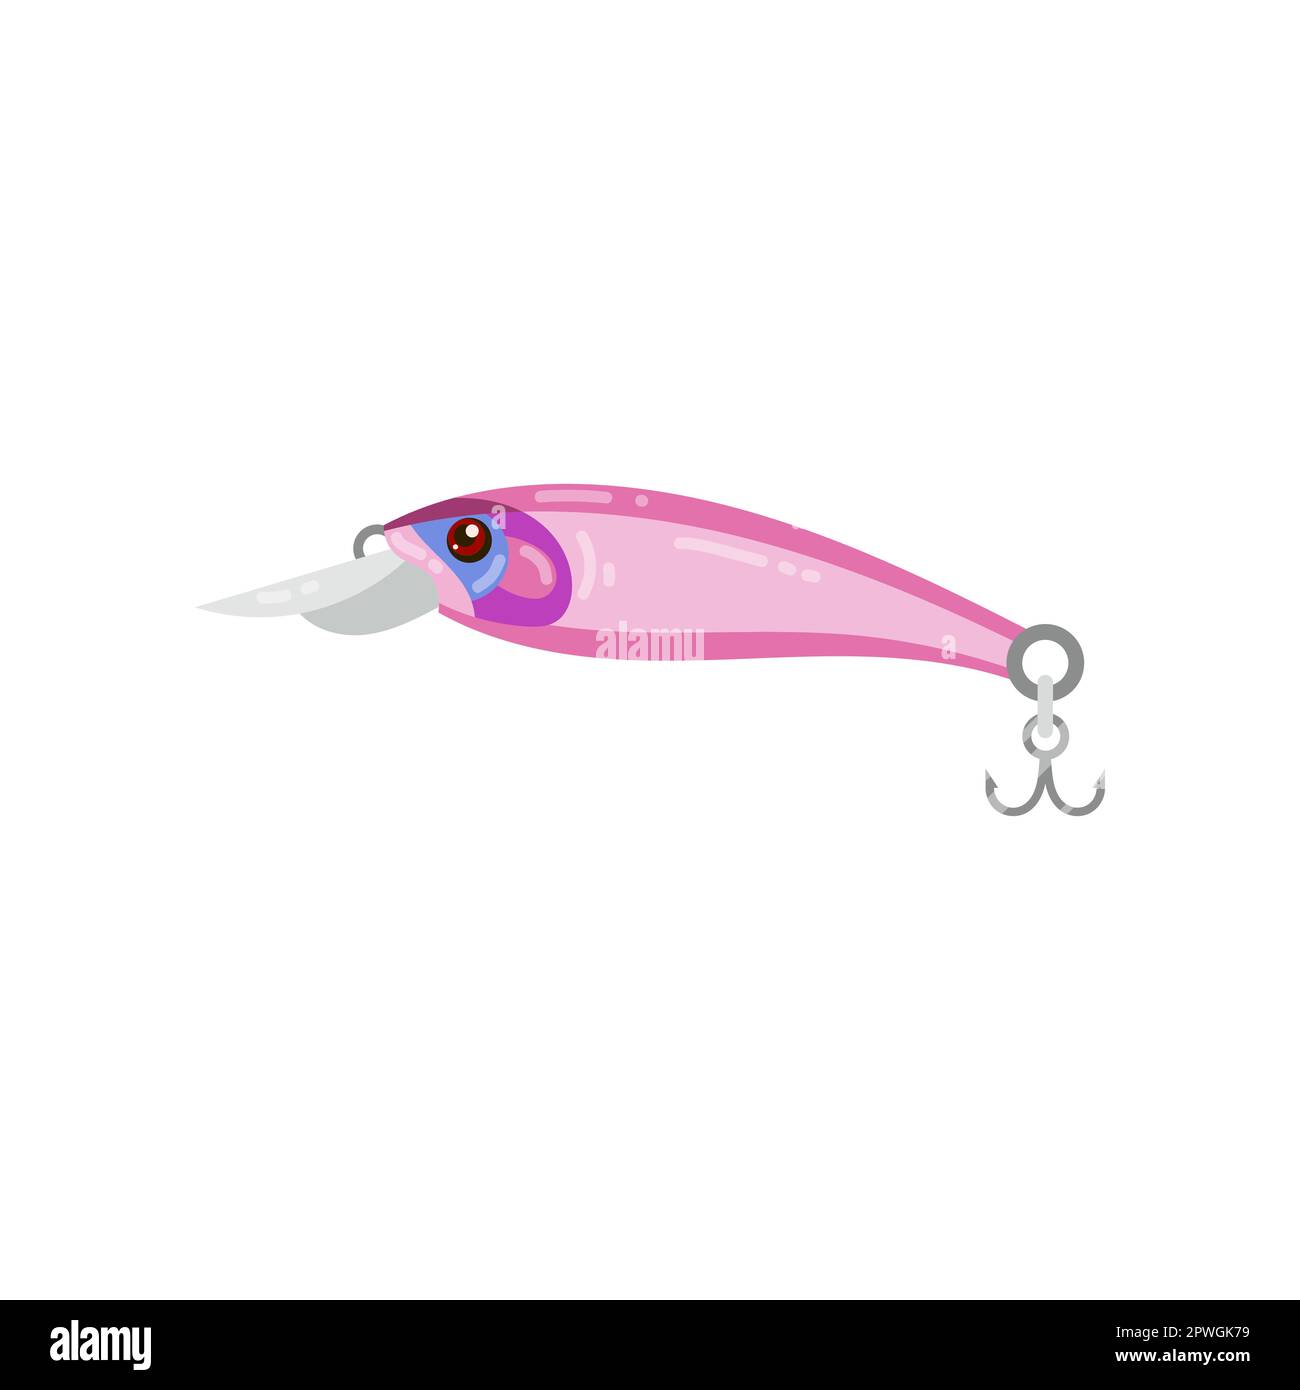 https://c8.alamy.com/comp/2PWGK79/pink-artificial-bait-in-shape-of-fish-cartoon-illustration-2PWGK79.jpg